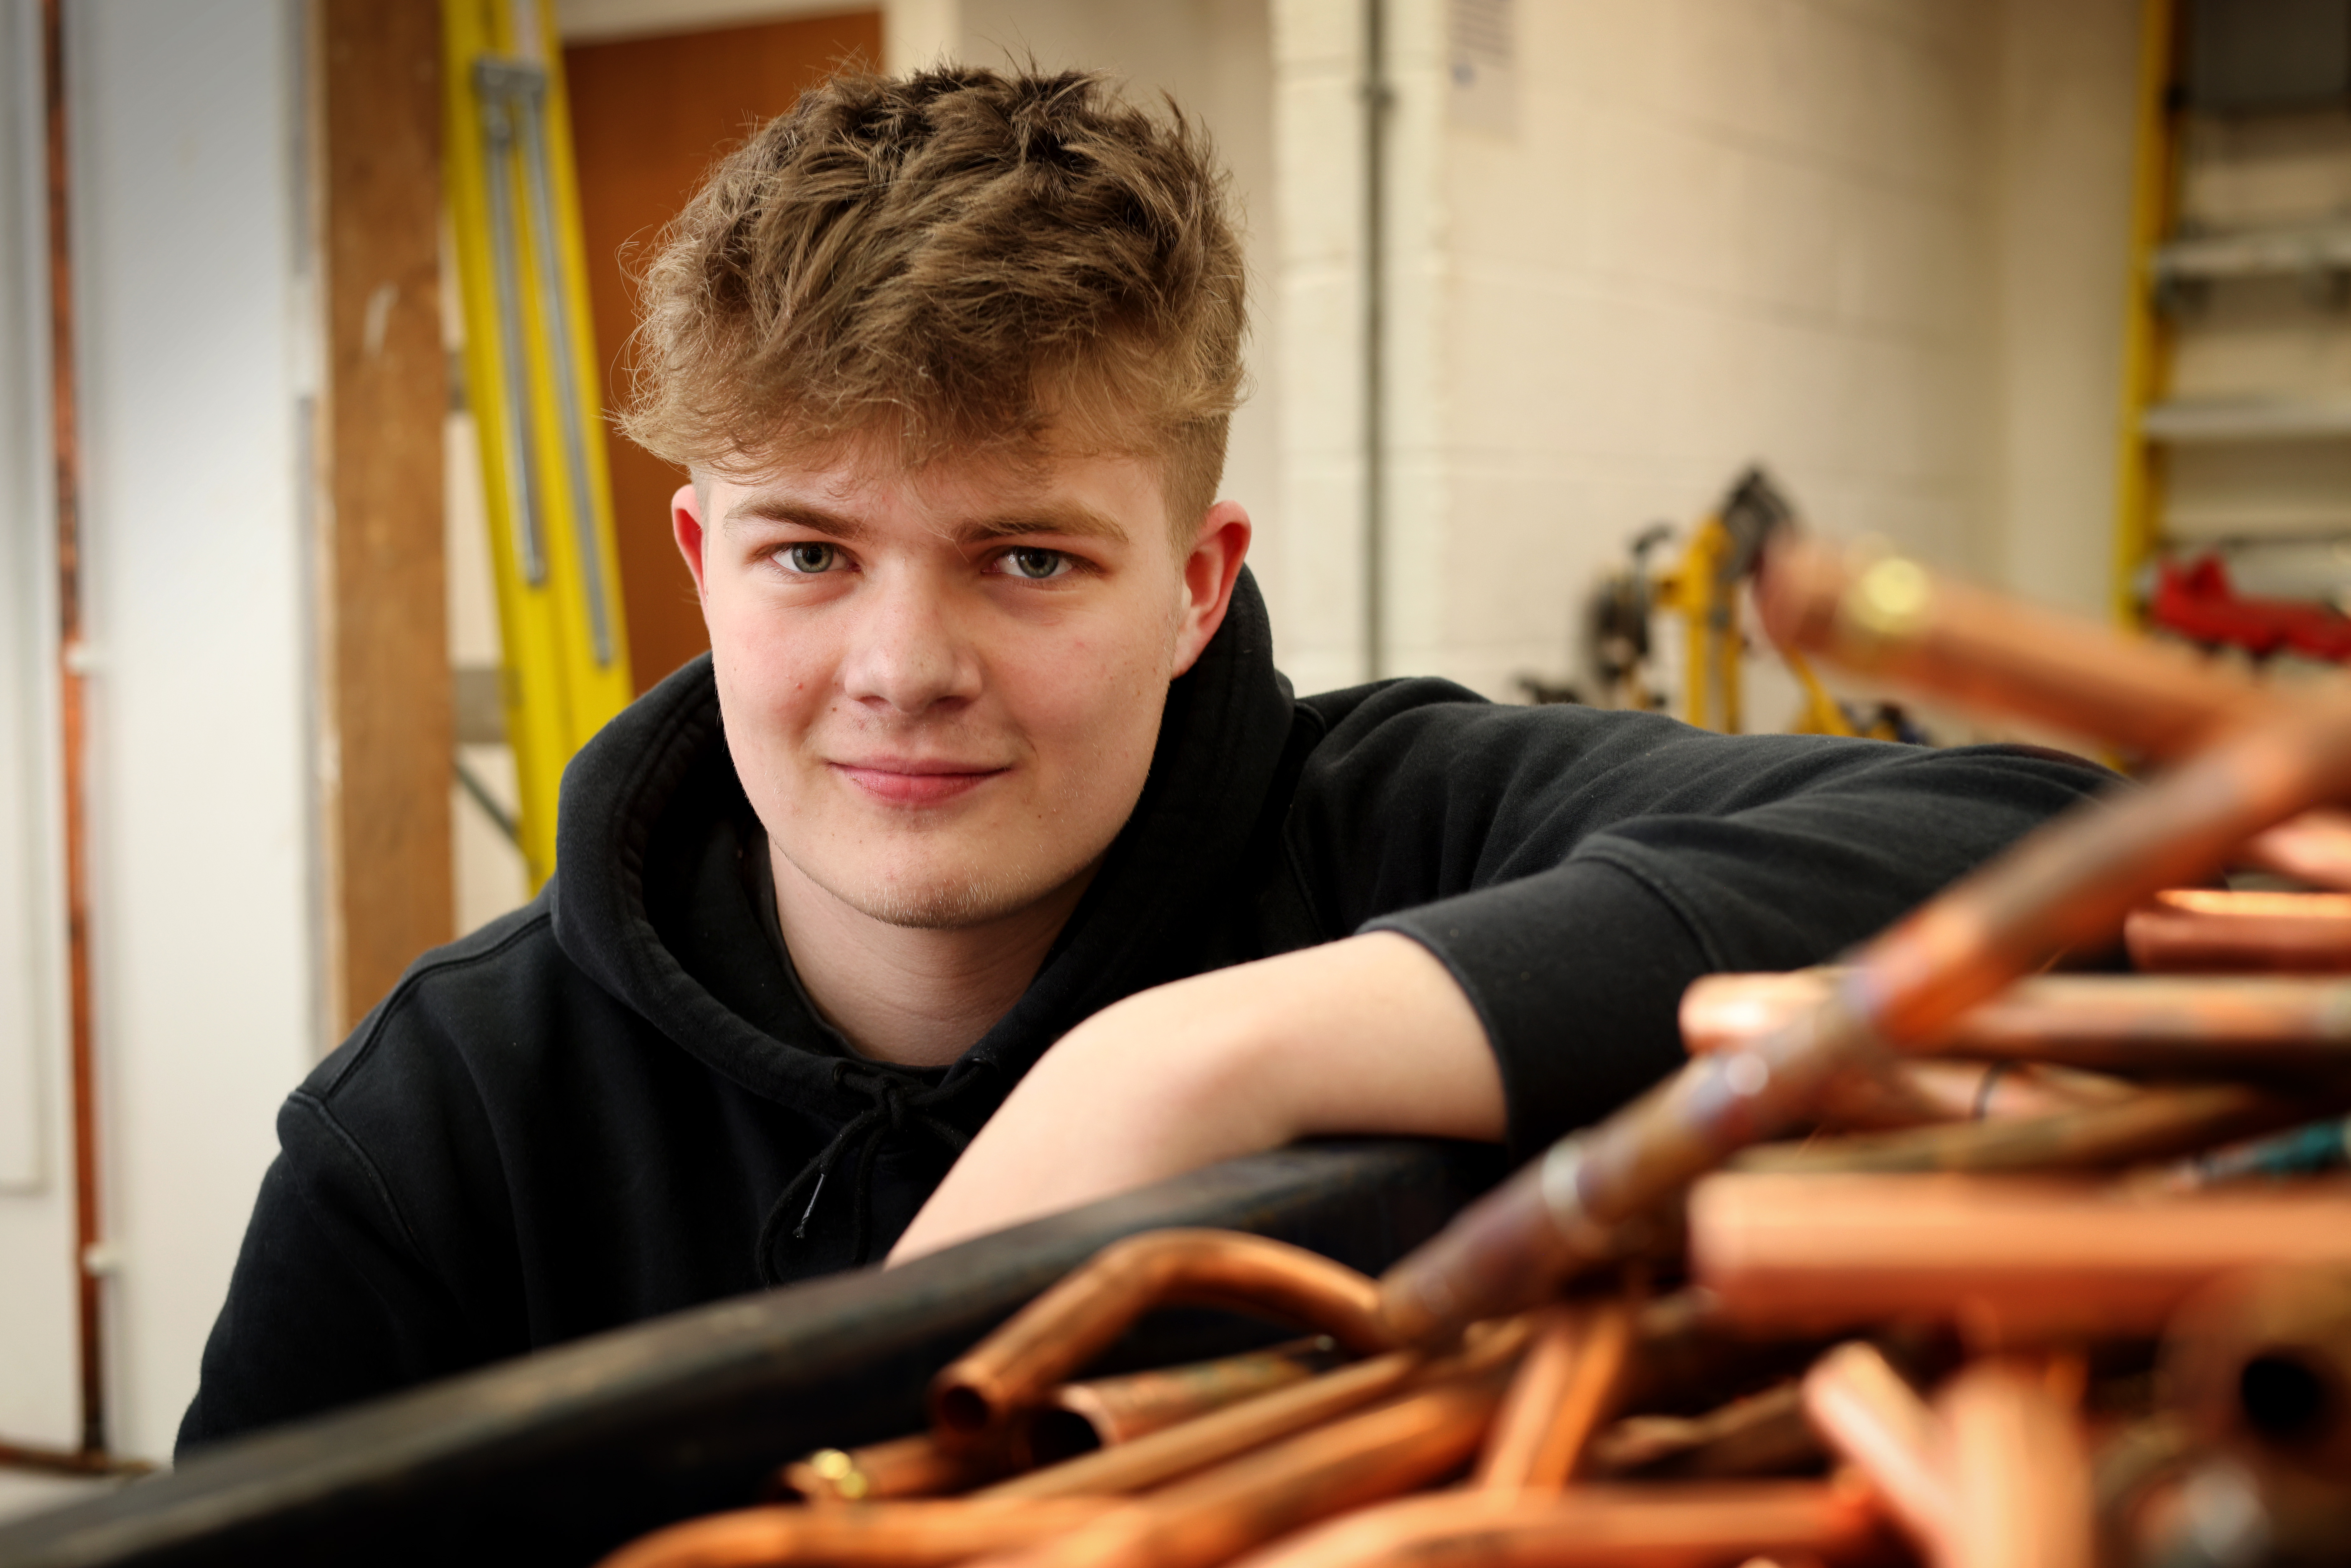 Meet Archie, Plumbing and Domestic Heating Apprentice at AAD Plumbing